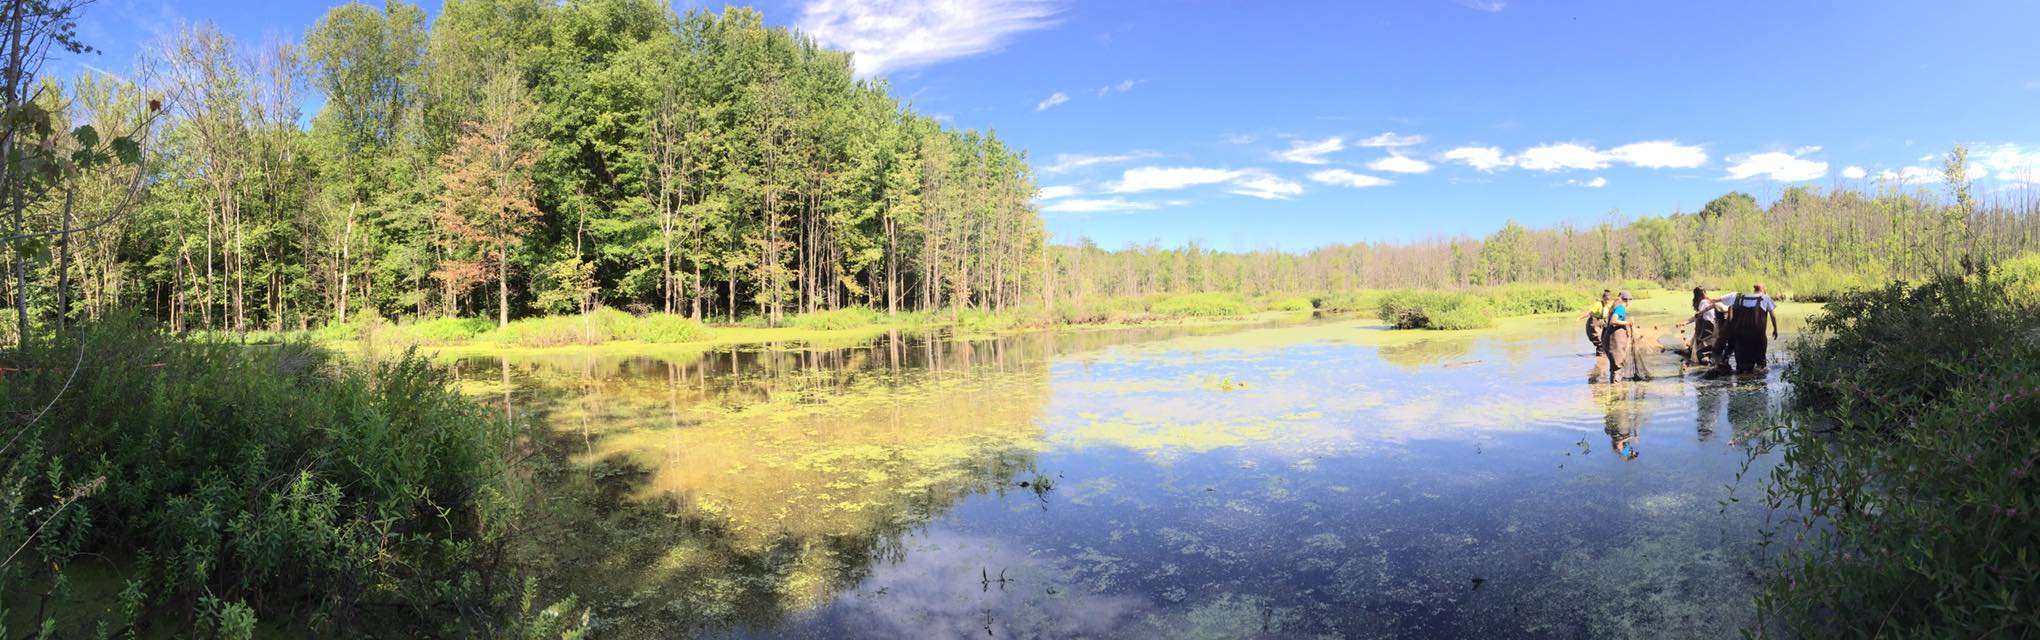 Beaver pond on a sunny day